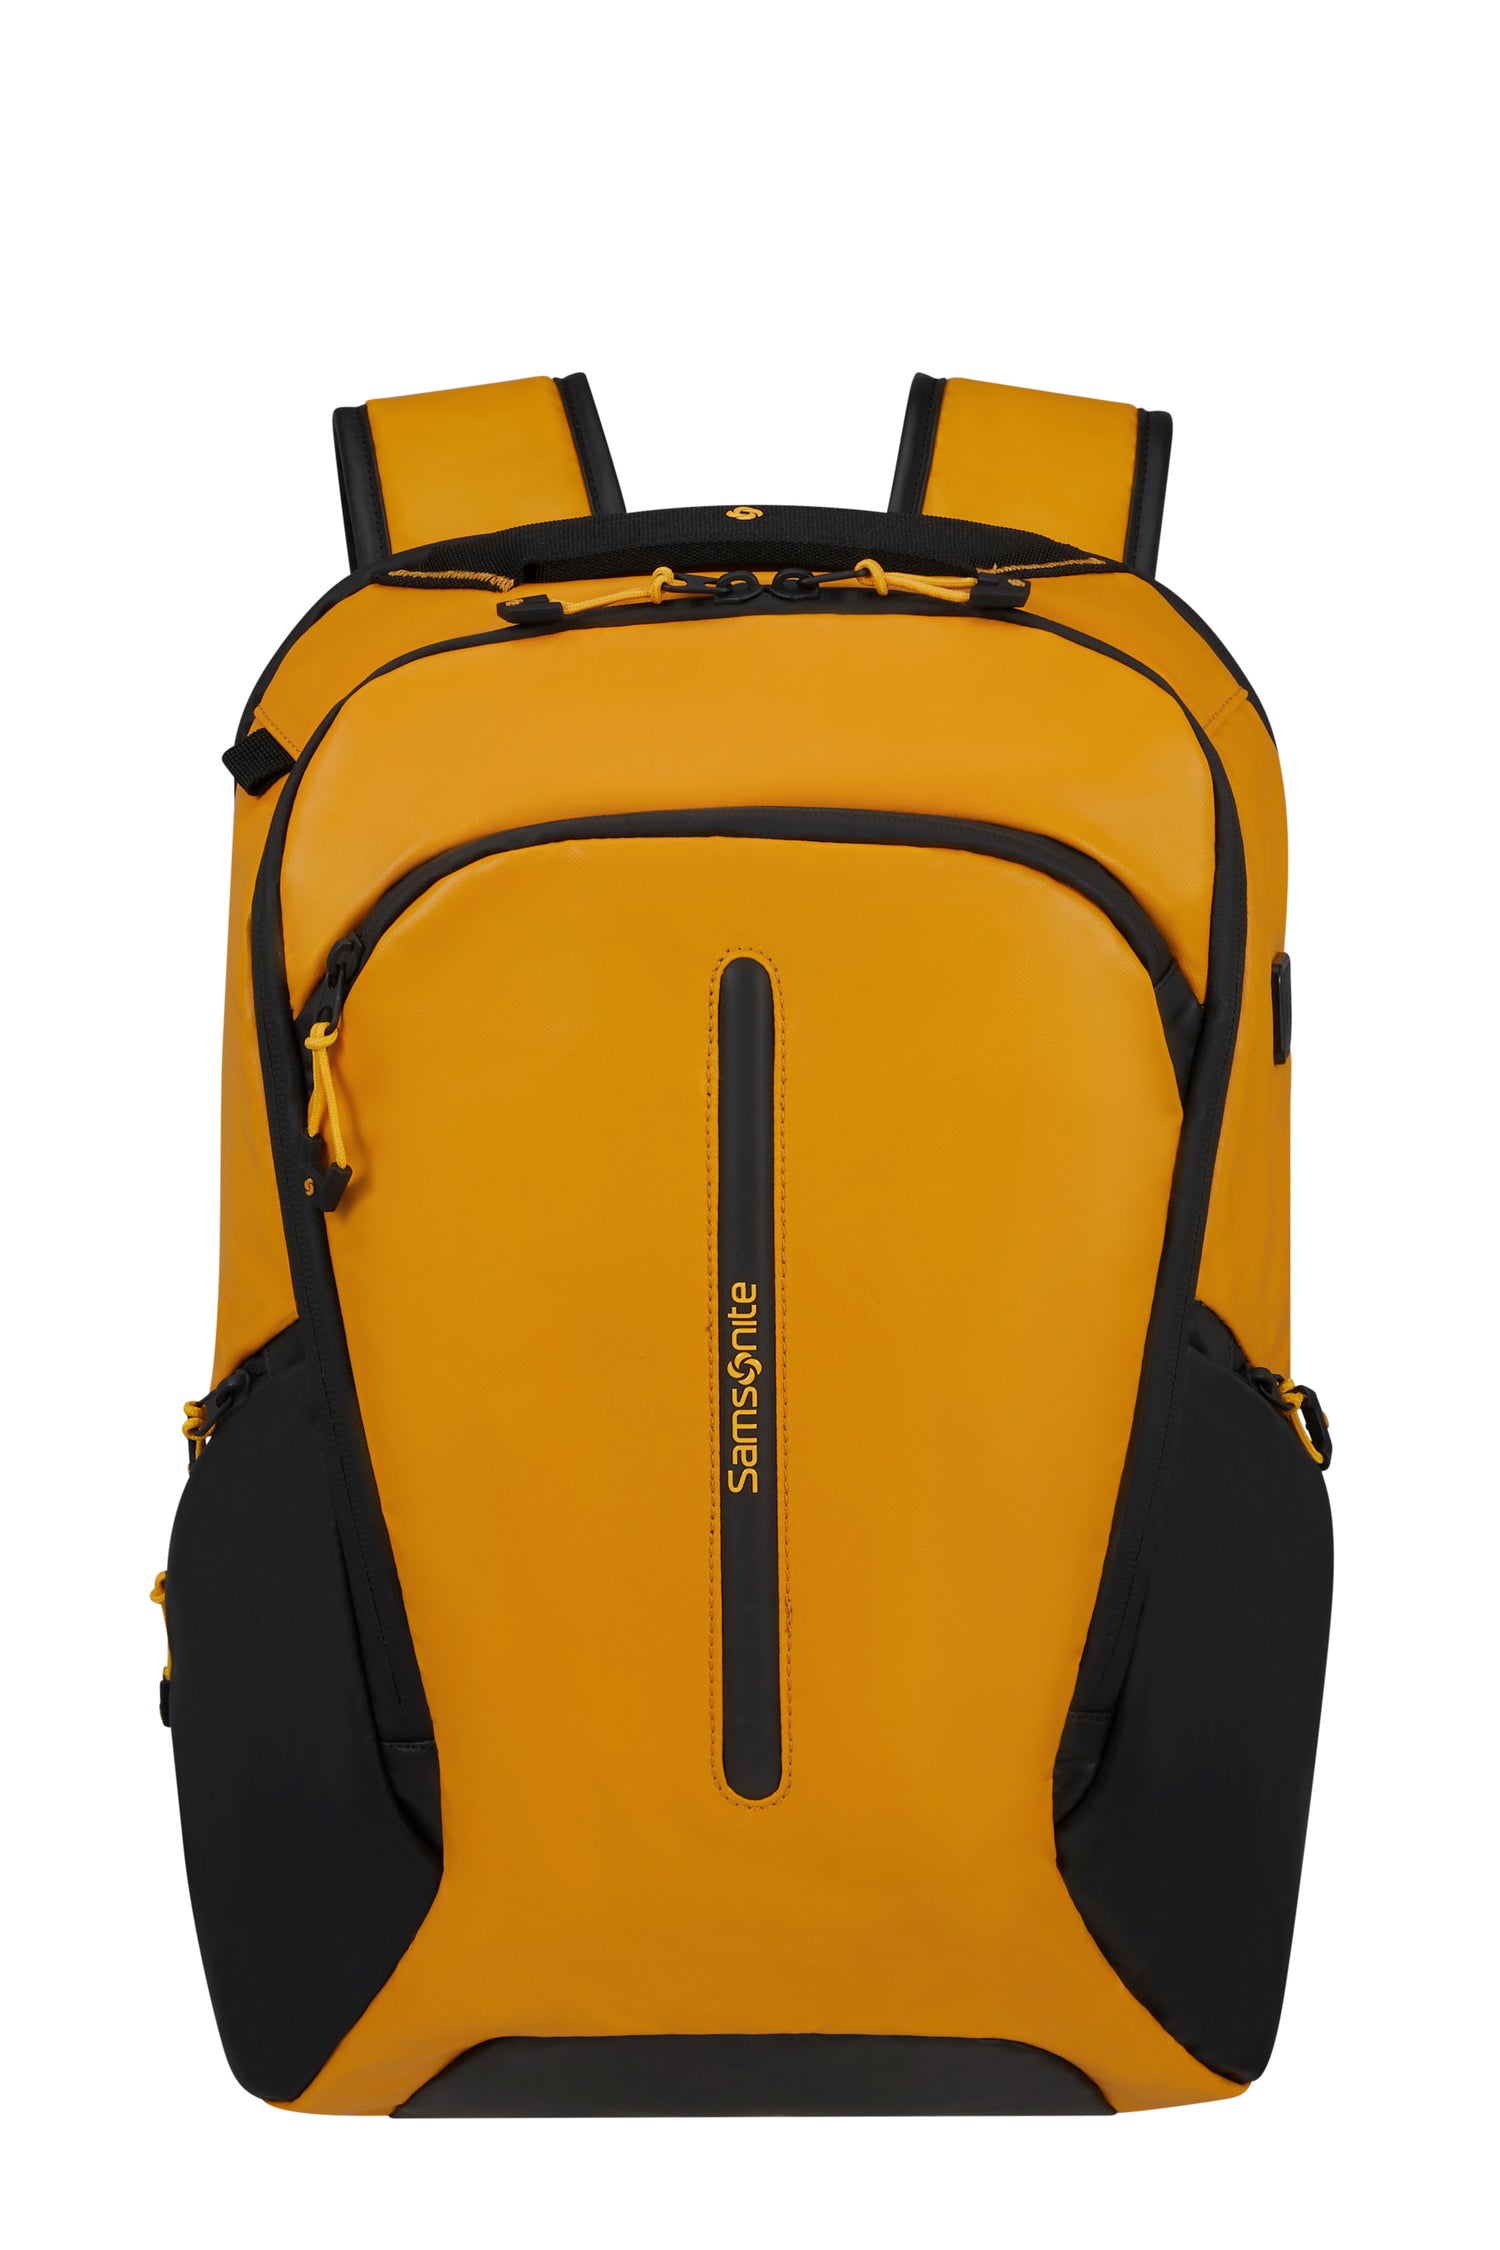 Samsonite Ecodiver Medium Urban Laptop Backpack USB 15.6”